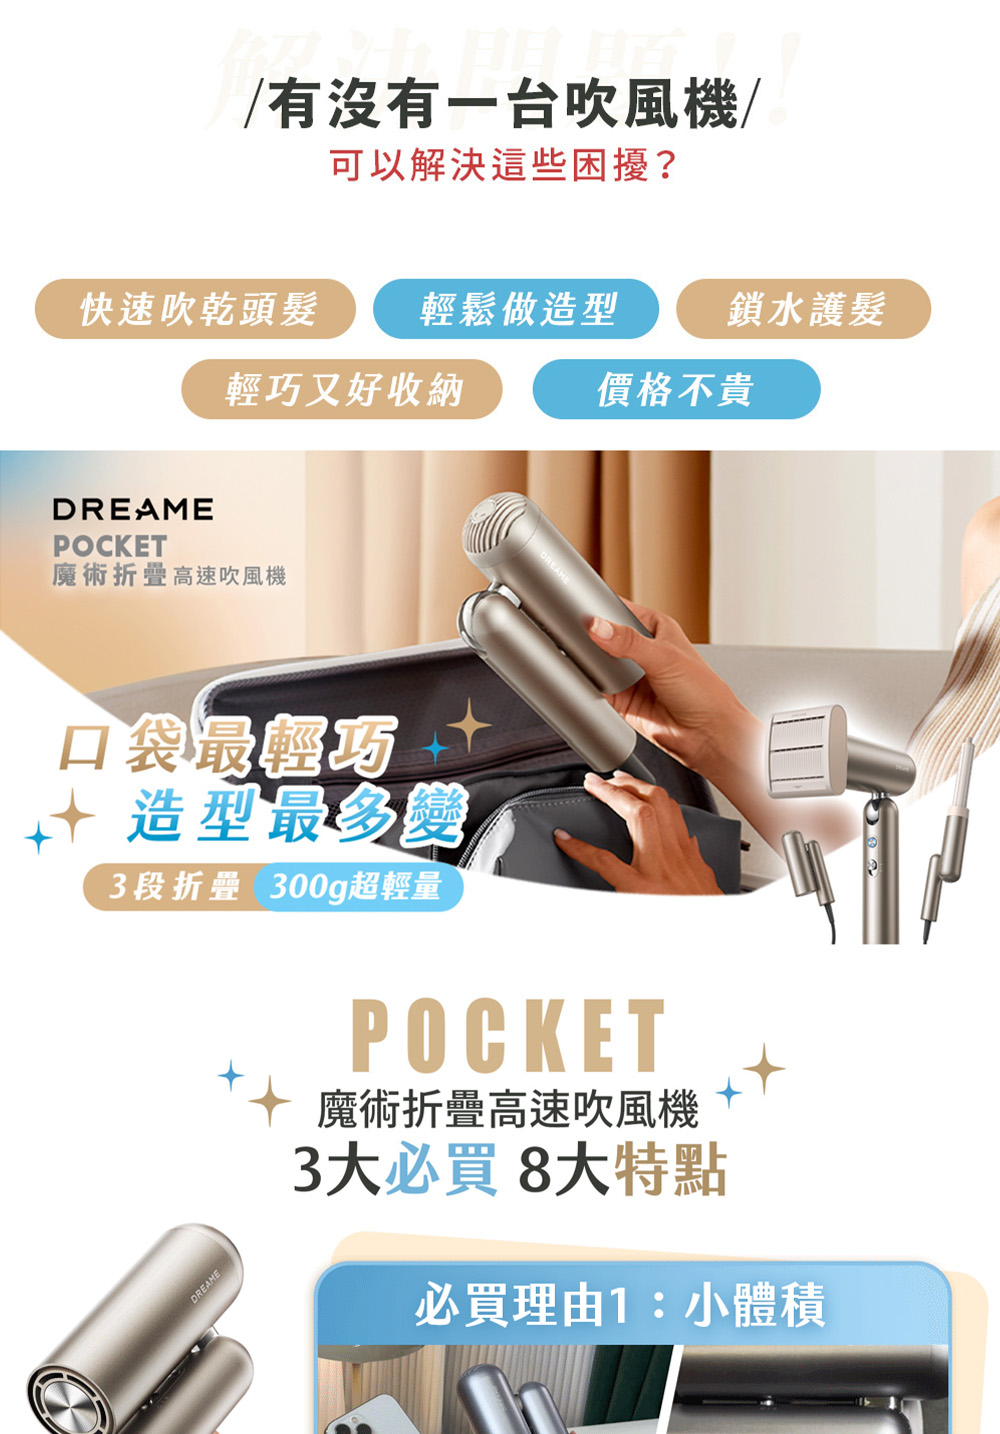 Dreame 追覓科技 Pocket 魔術折疊高速吹風機(直